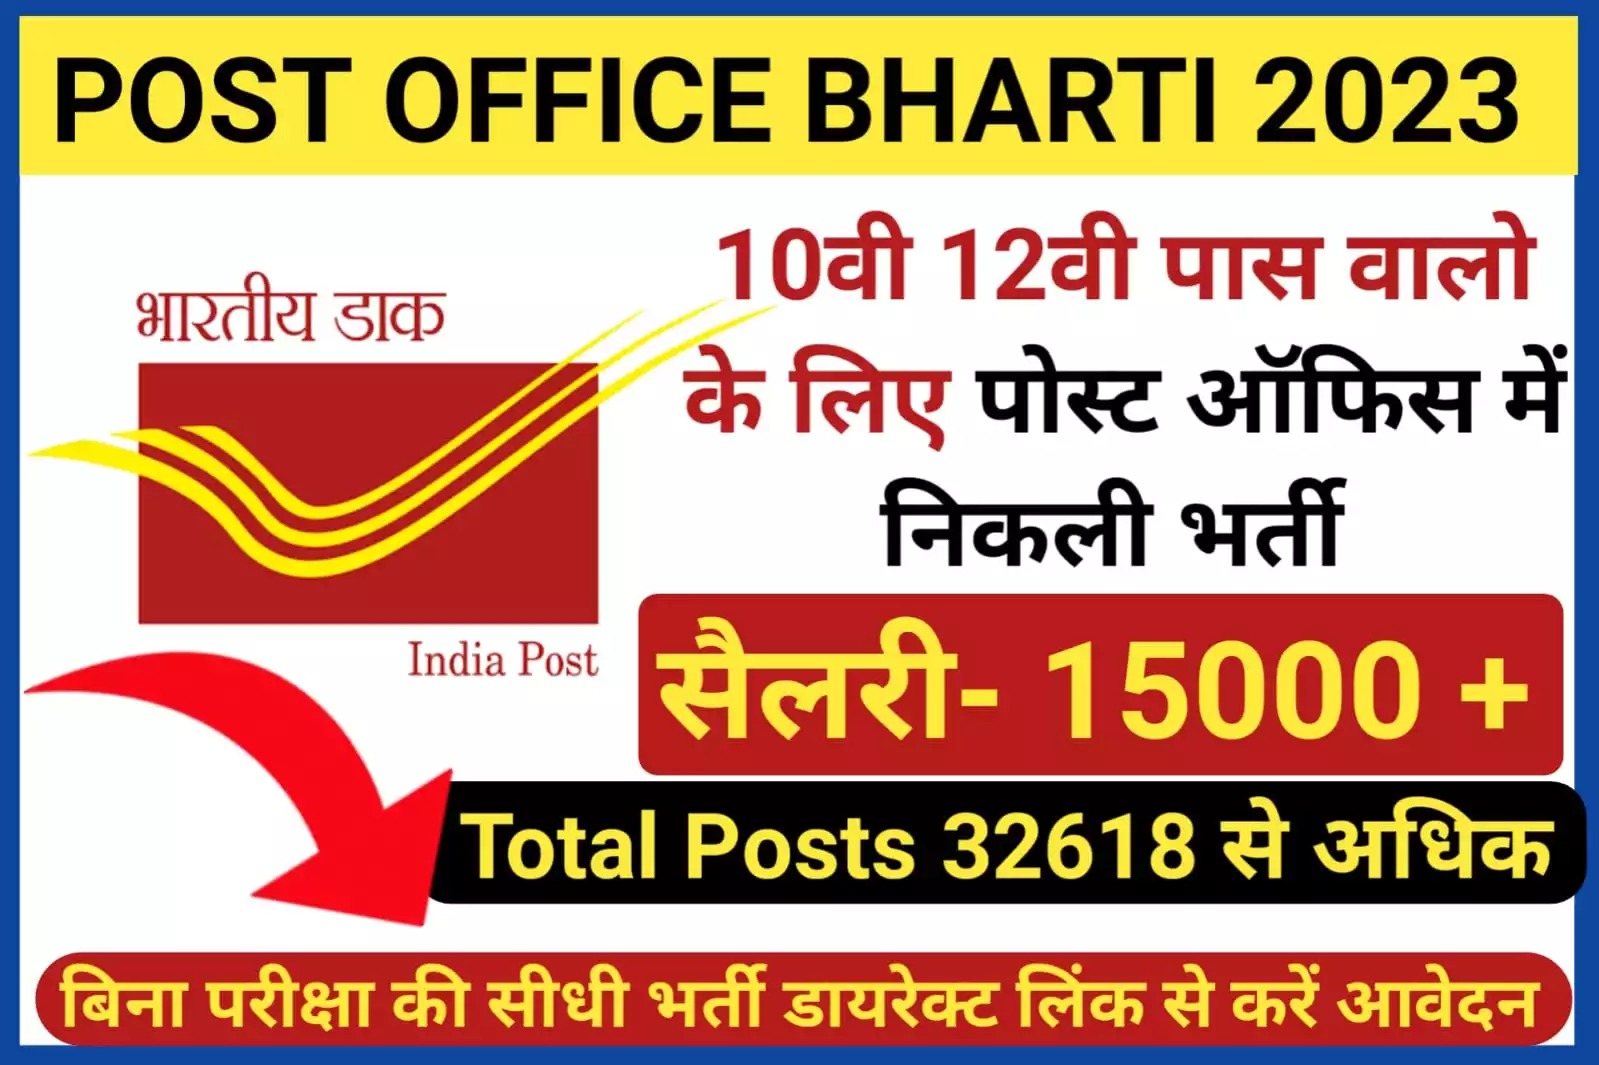 POST OFFICE BHARTI 2023